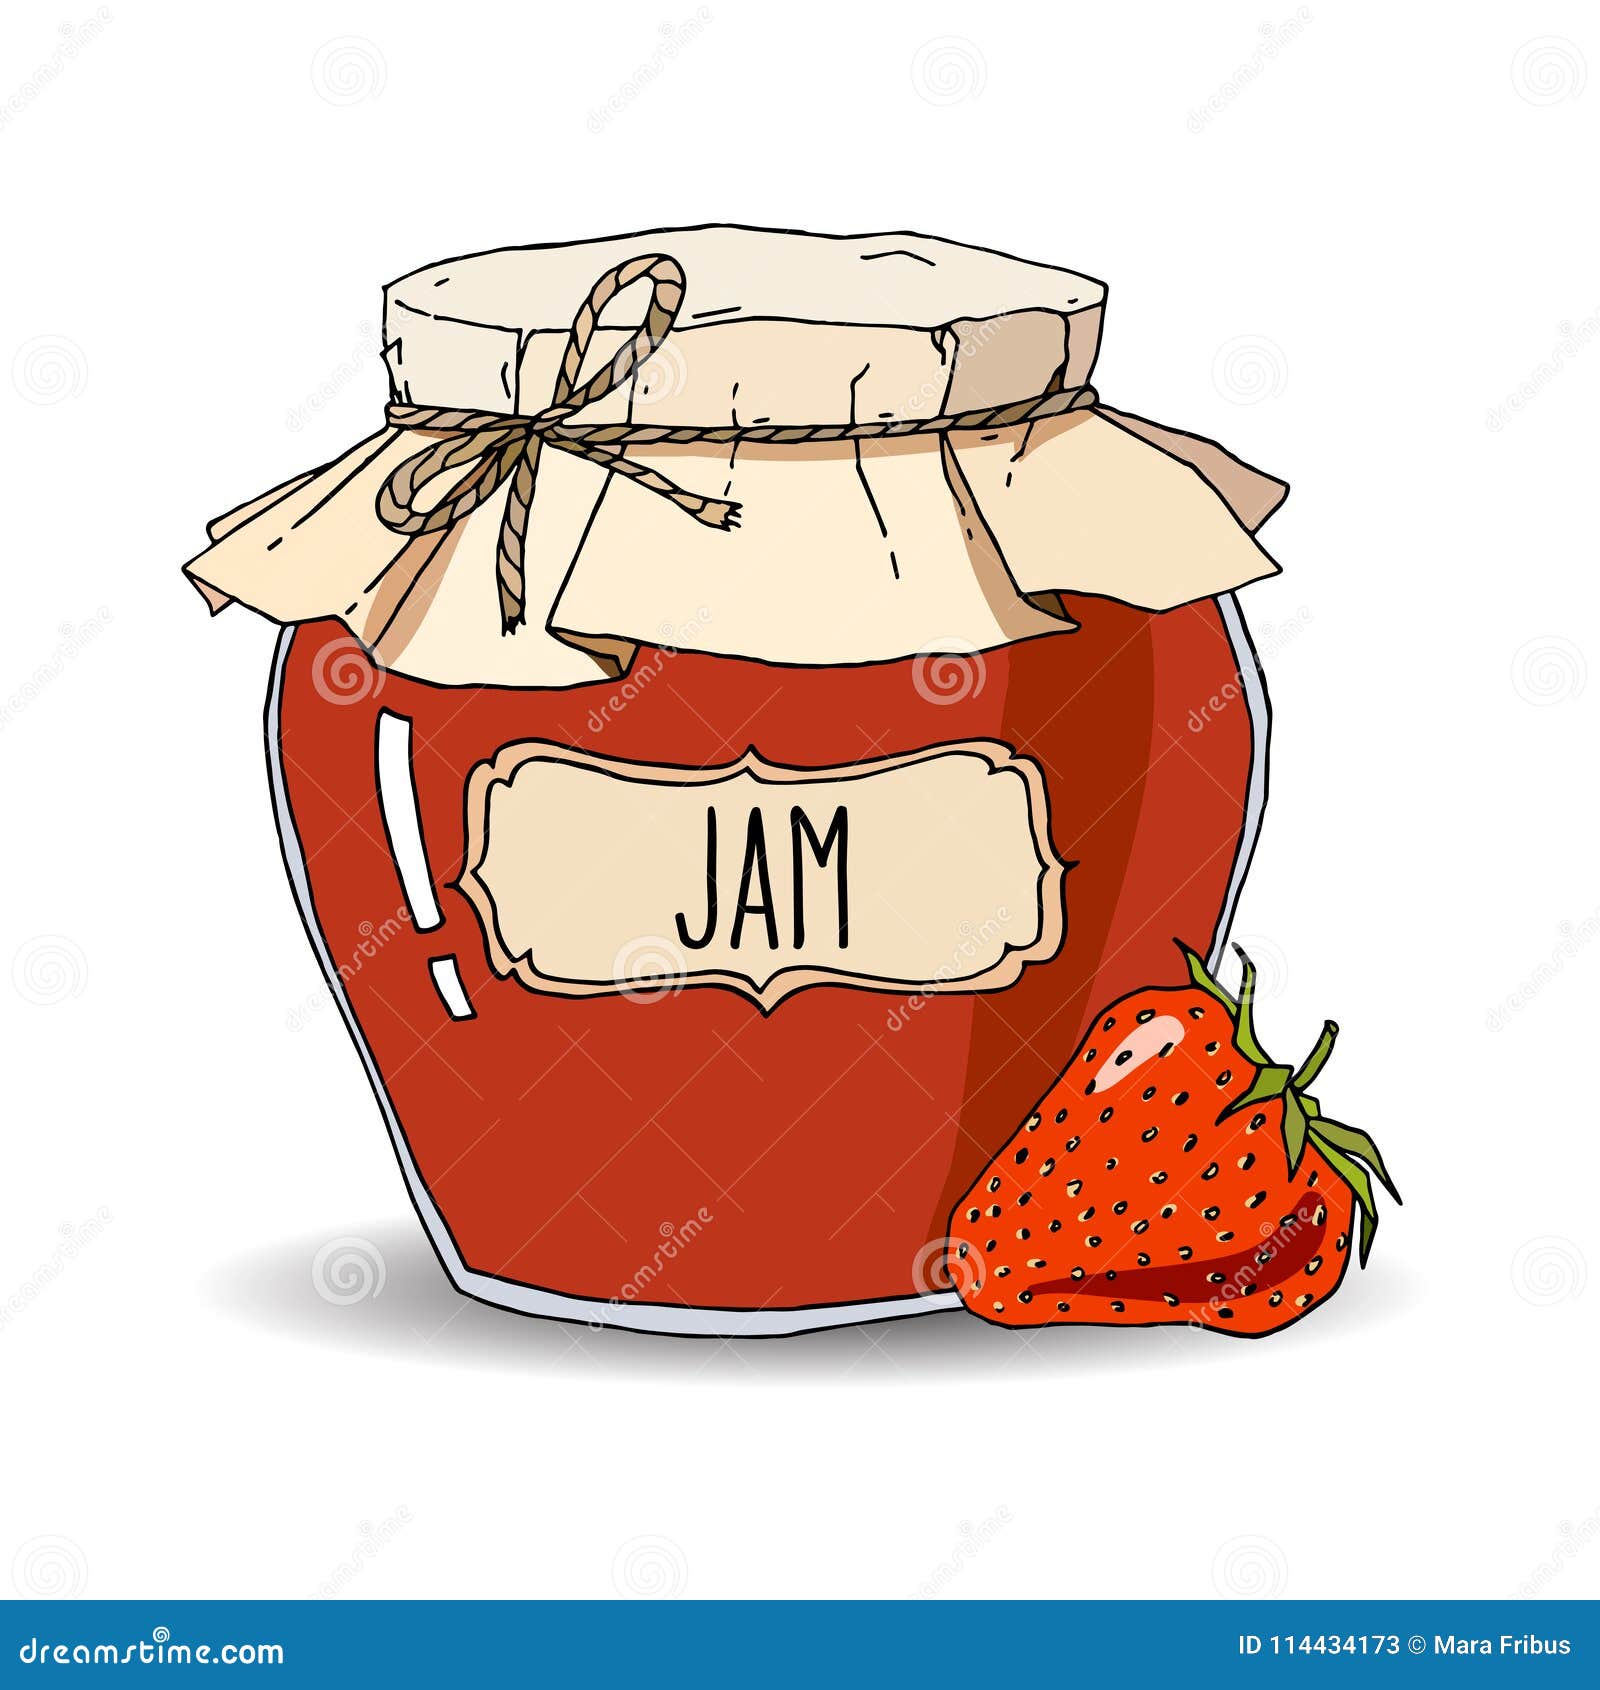 90 Drawing Of The Jam Jar Illustrations RoyaltyFree Vector Graphics   Clip Art  iStock